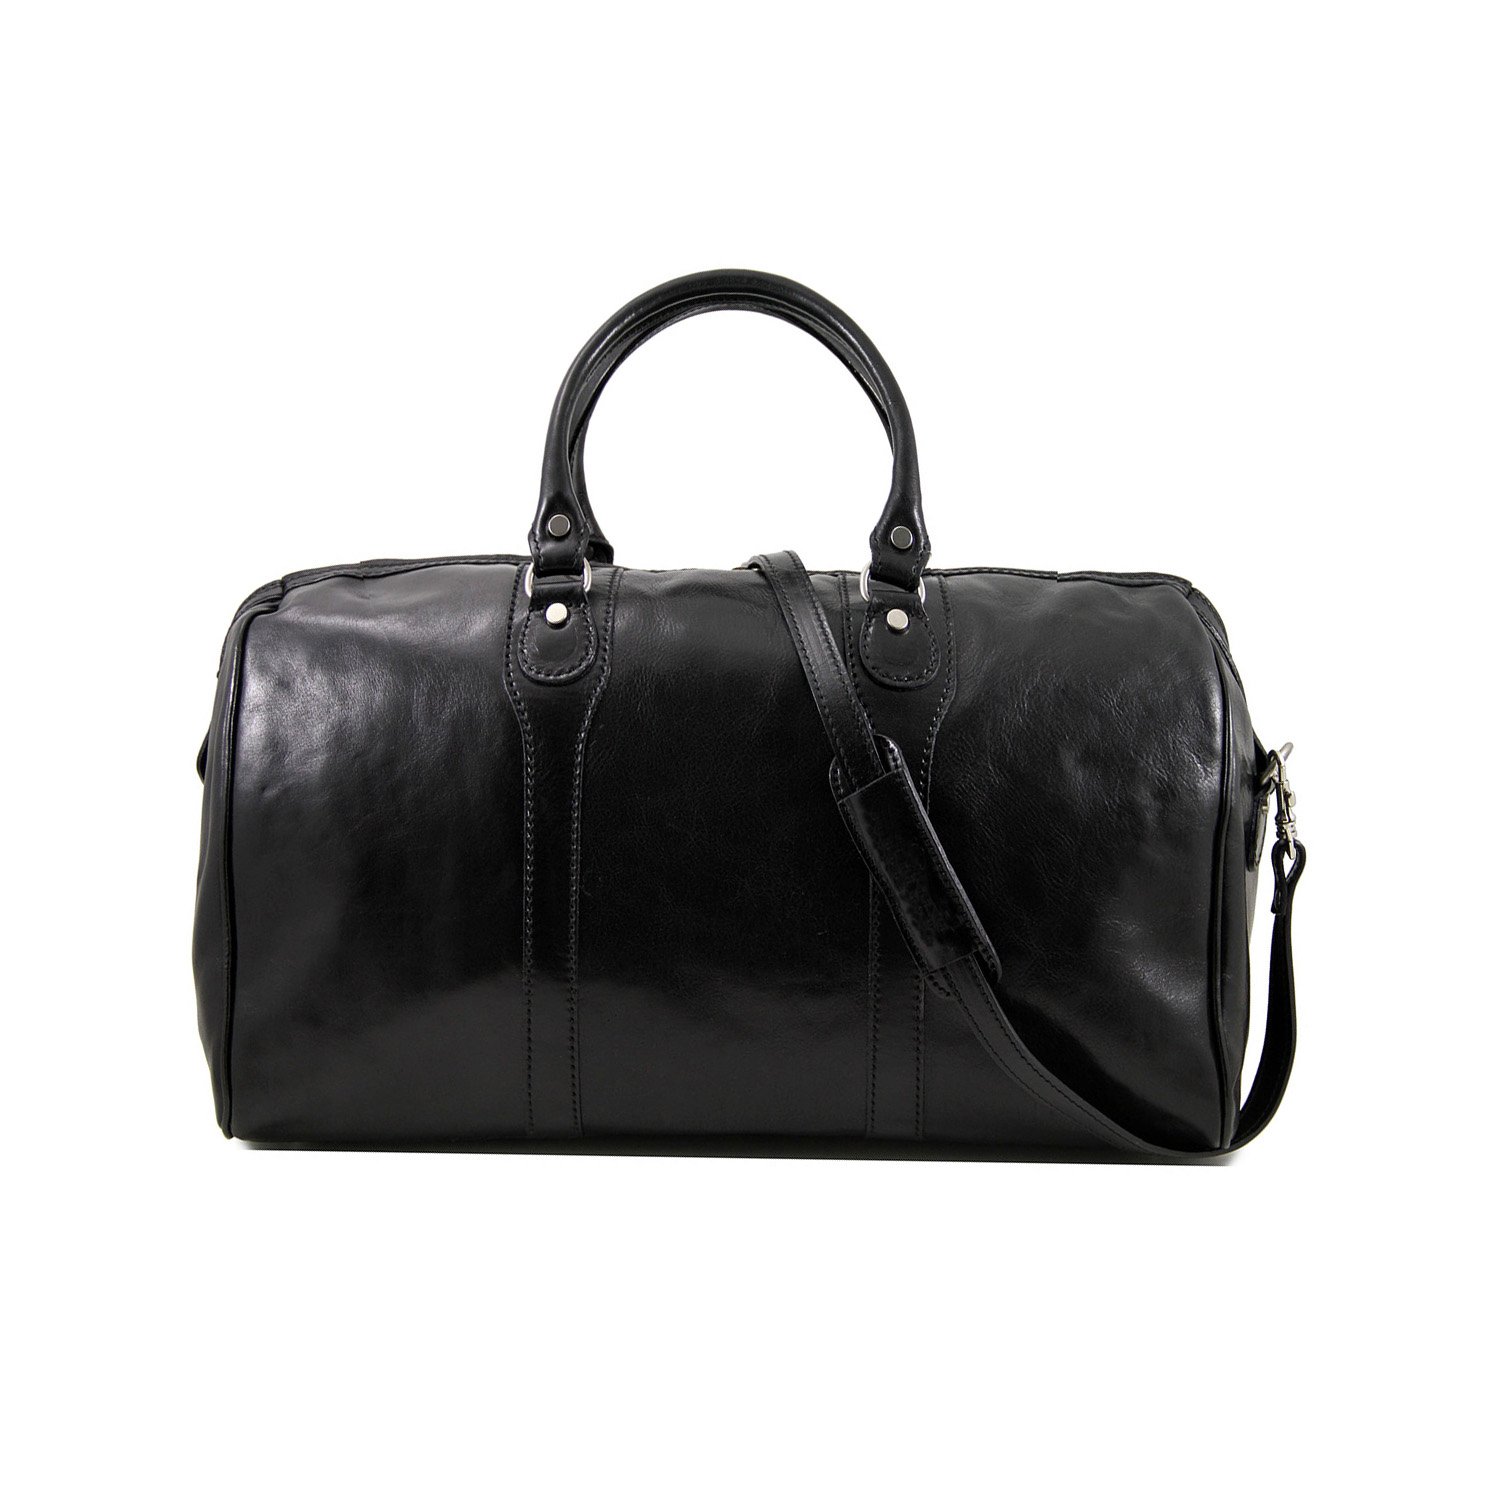 Black Leather Duffle Bag Designer | The Art of Mike Mignola